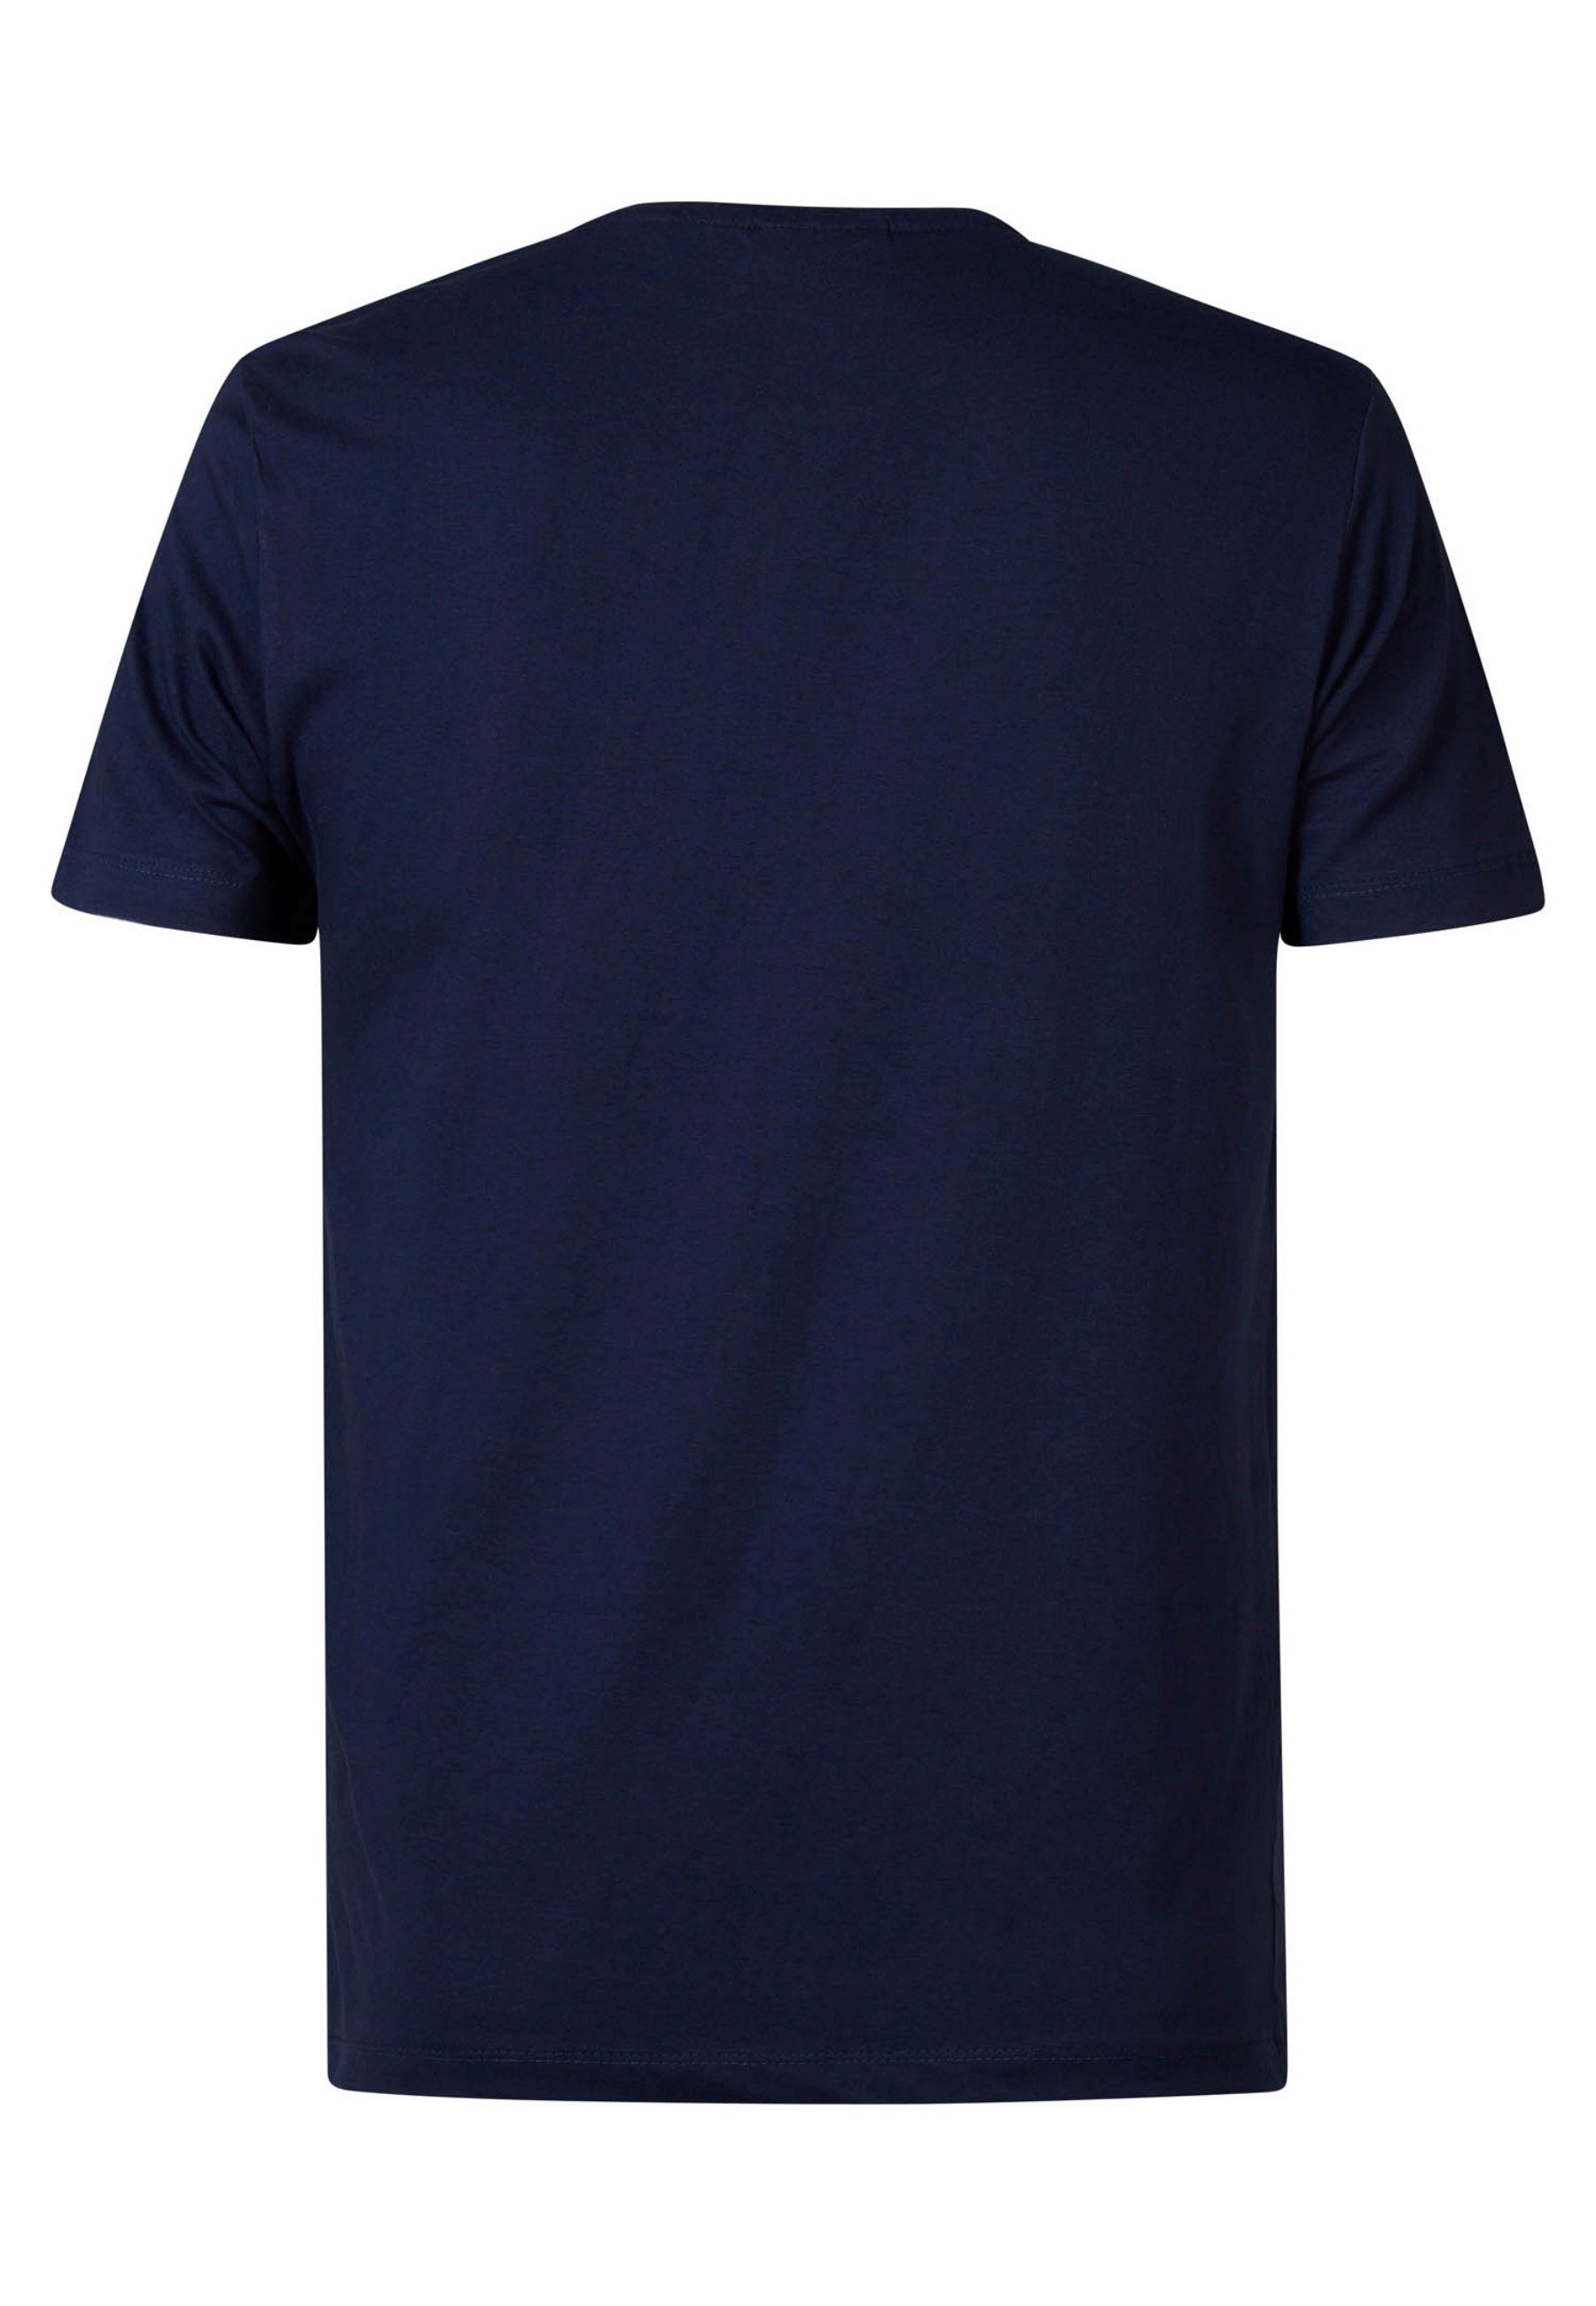 T-Shirt Kurzarmshirt dunkelblau Print Petrol T-Shirt Photo Industries